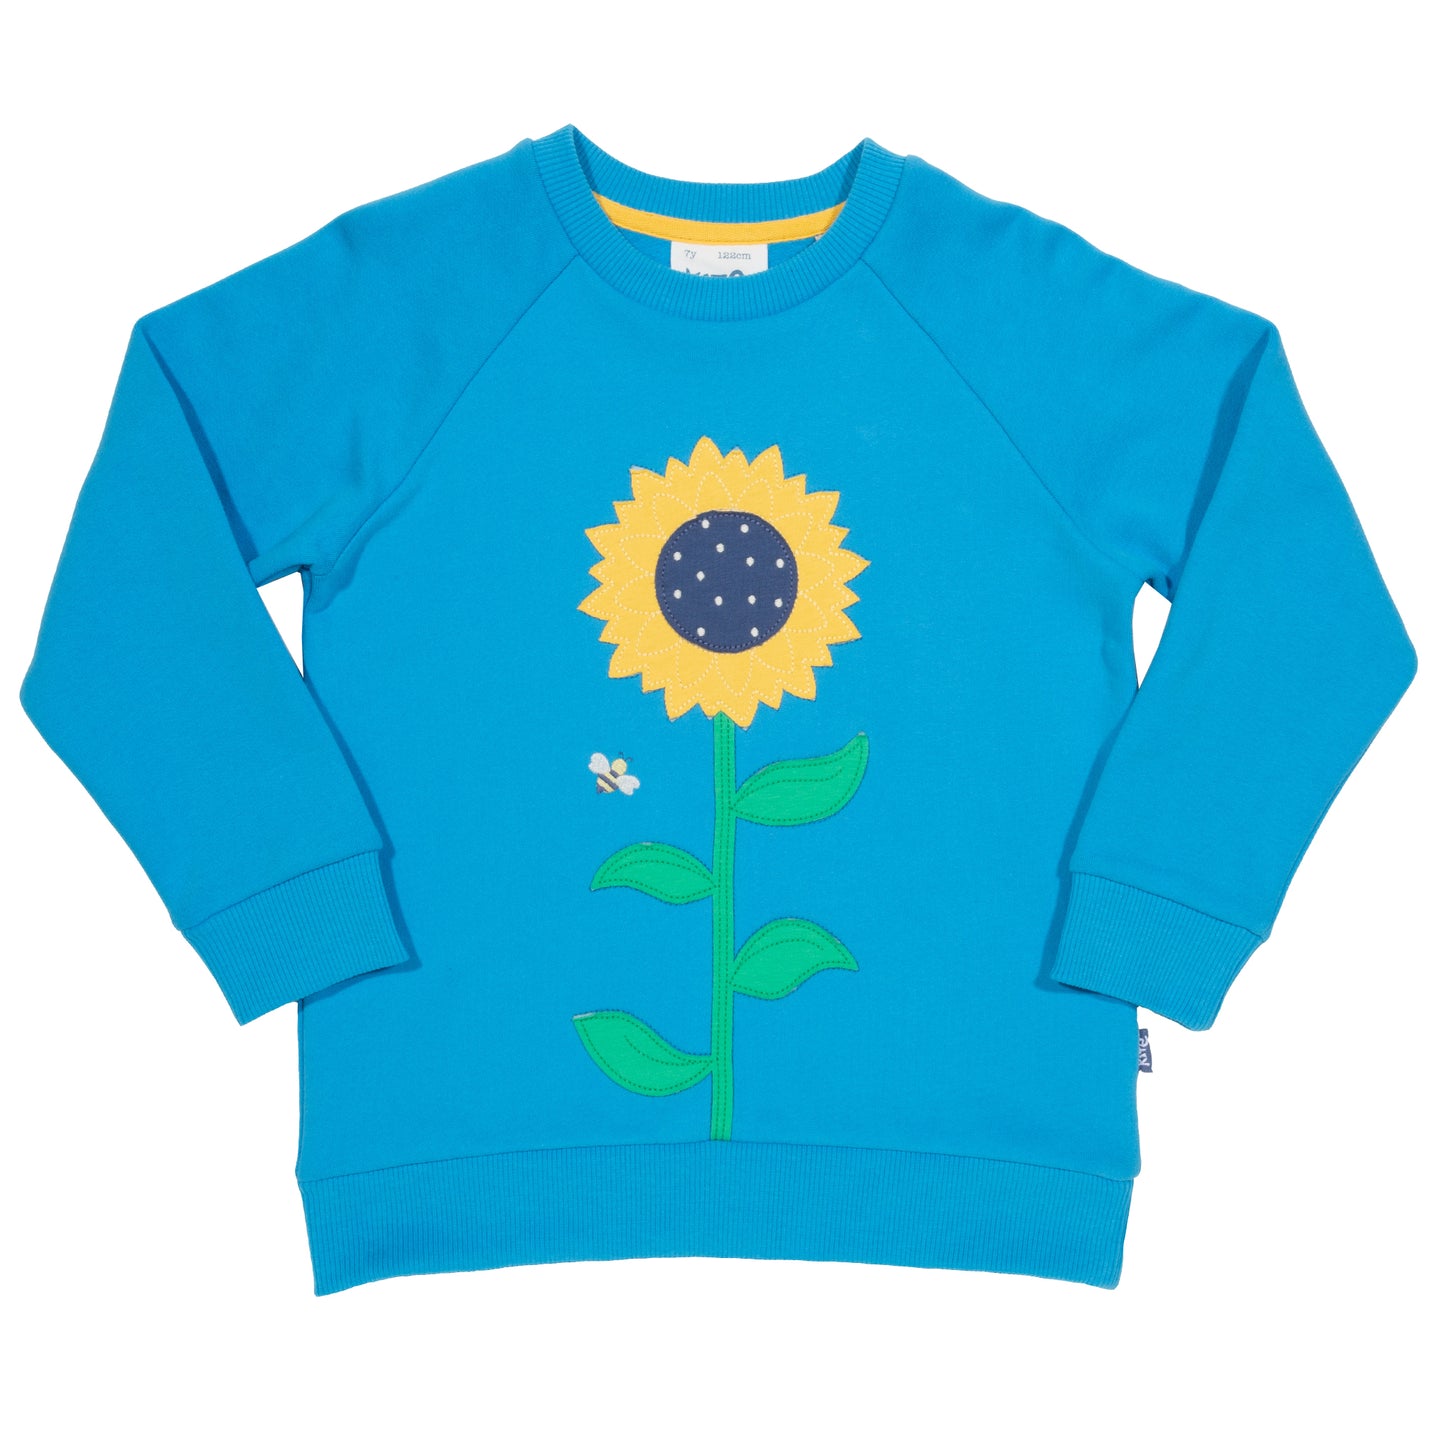 Sunflower sweatshirt